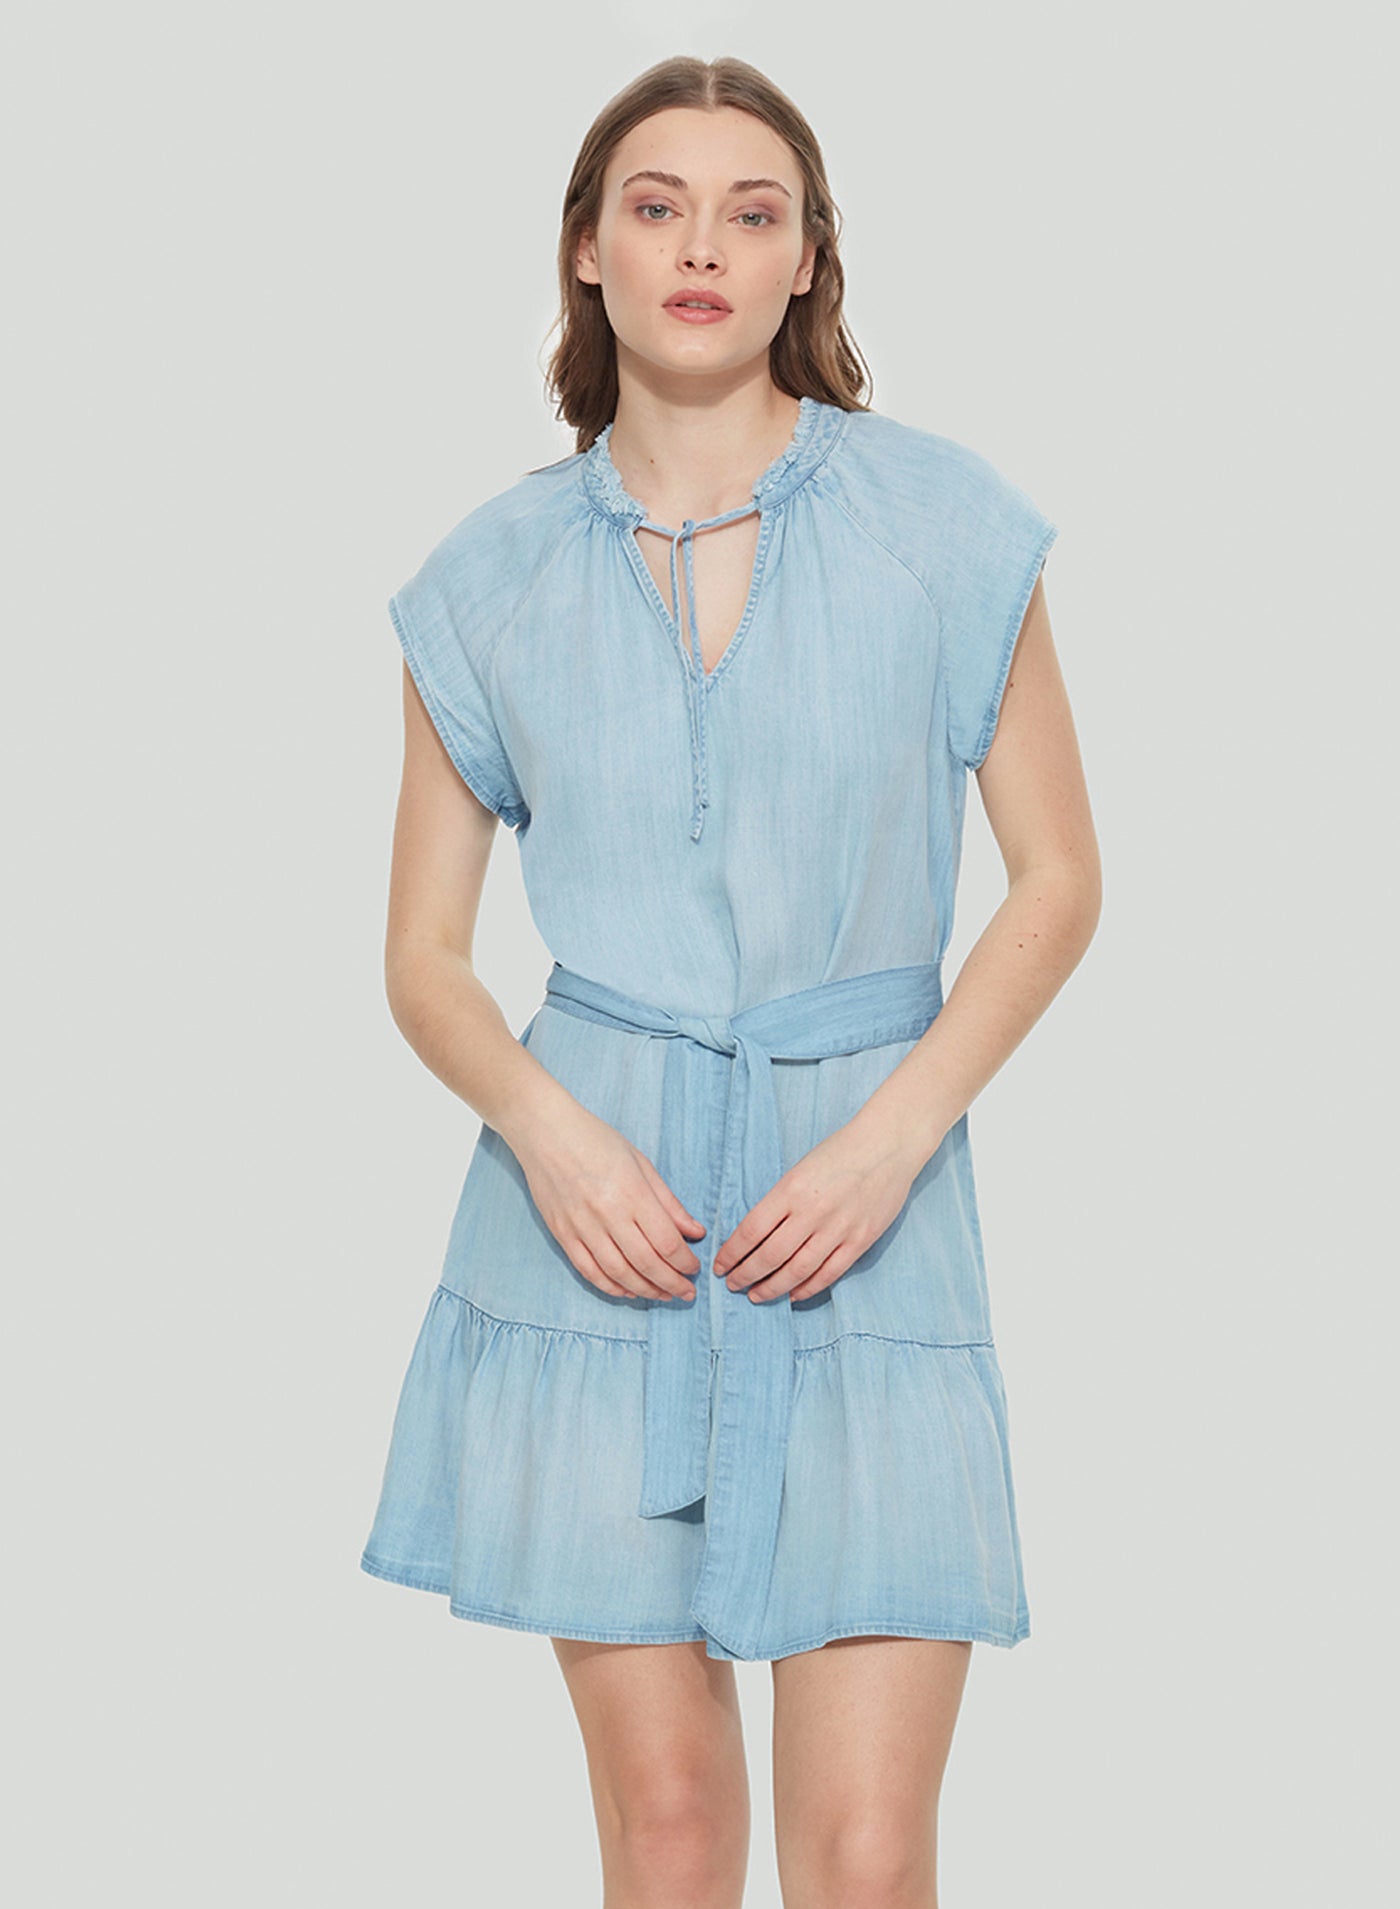 Dex Dress - Jean Style - Blue Wash - SMALL